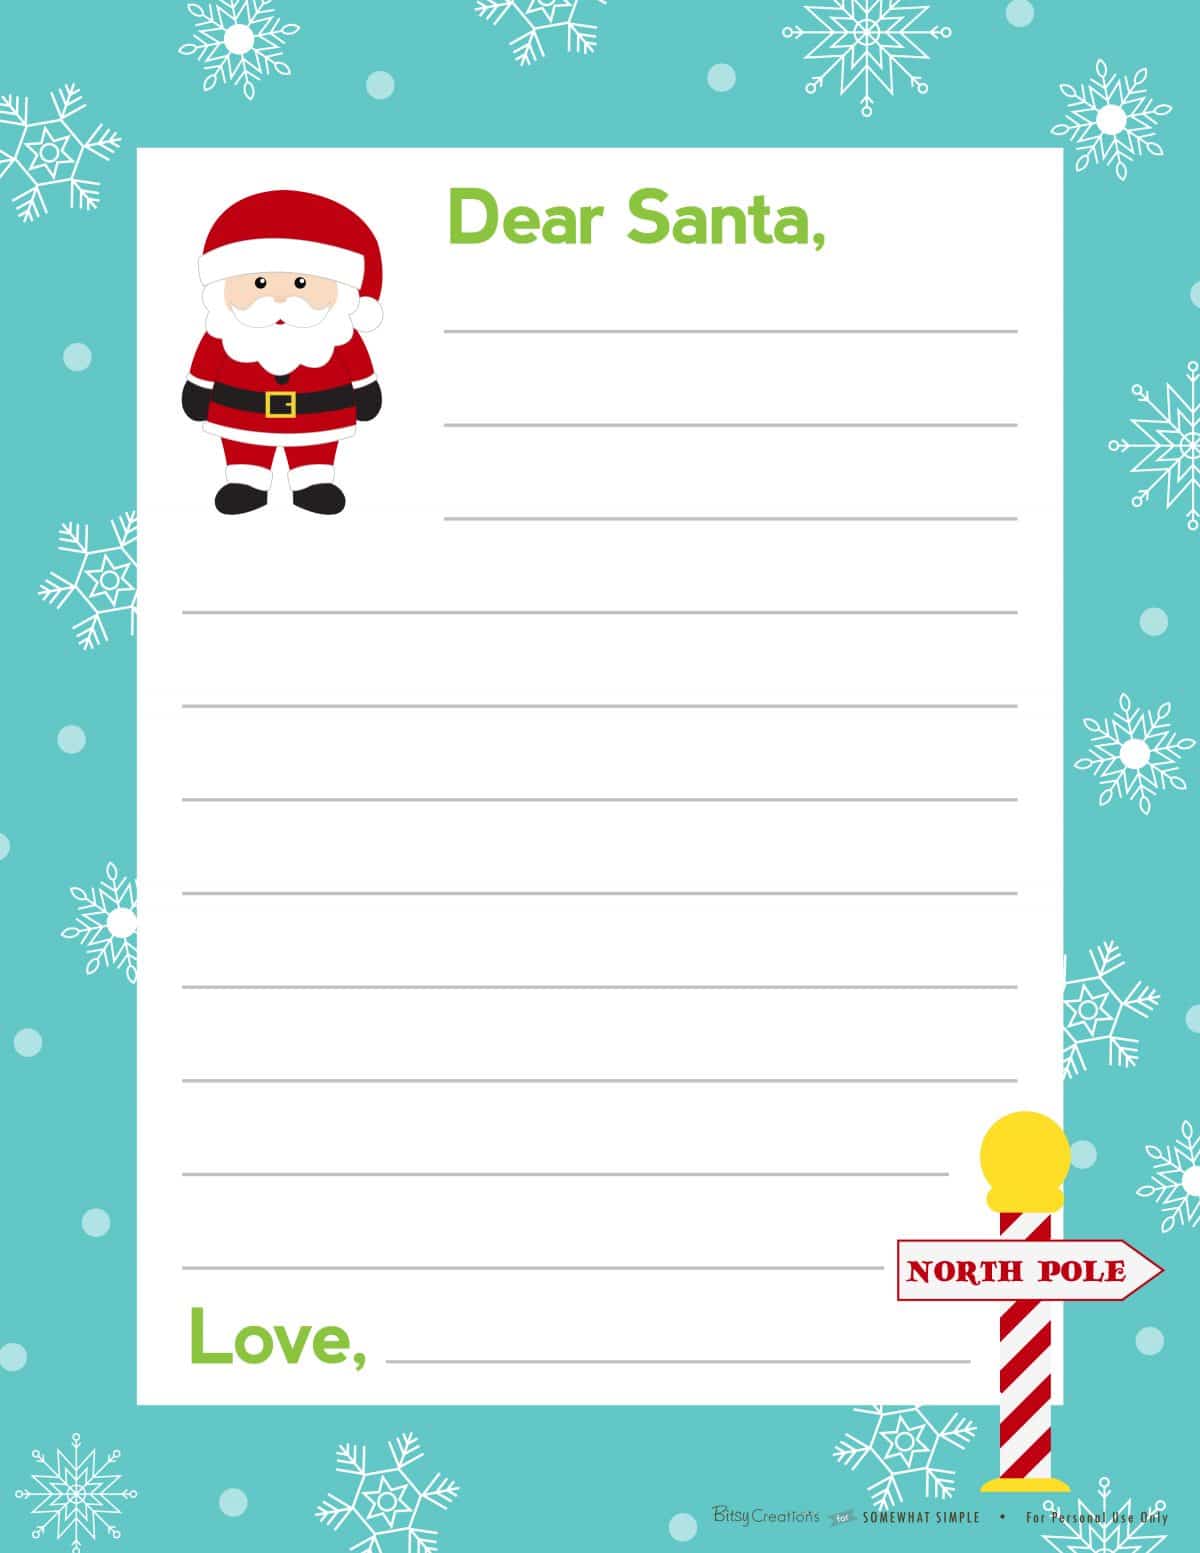 santa-s-address-for-mailing-him-a-letter-free-printable-santa-letter